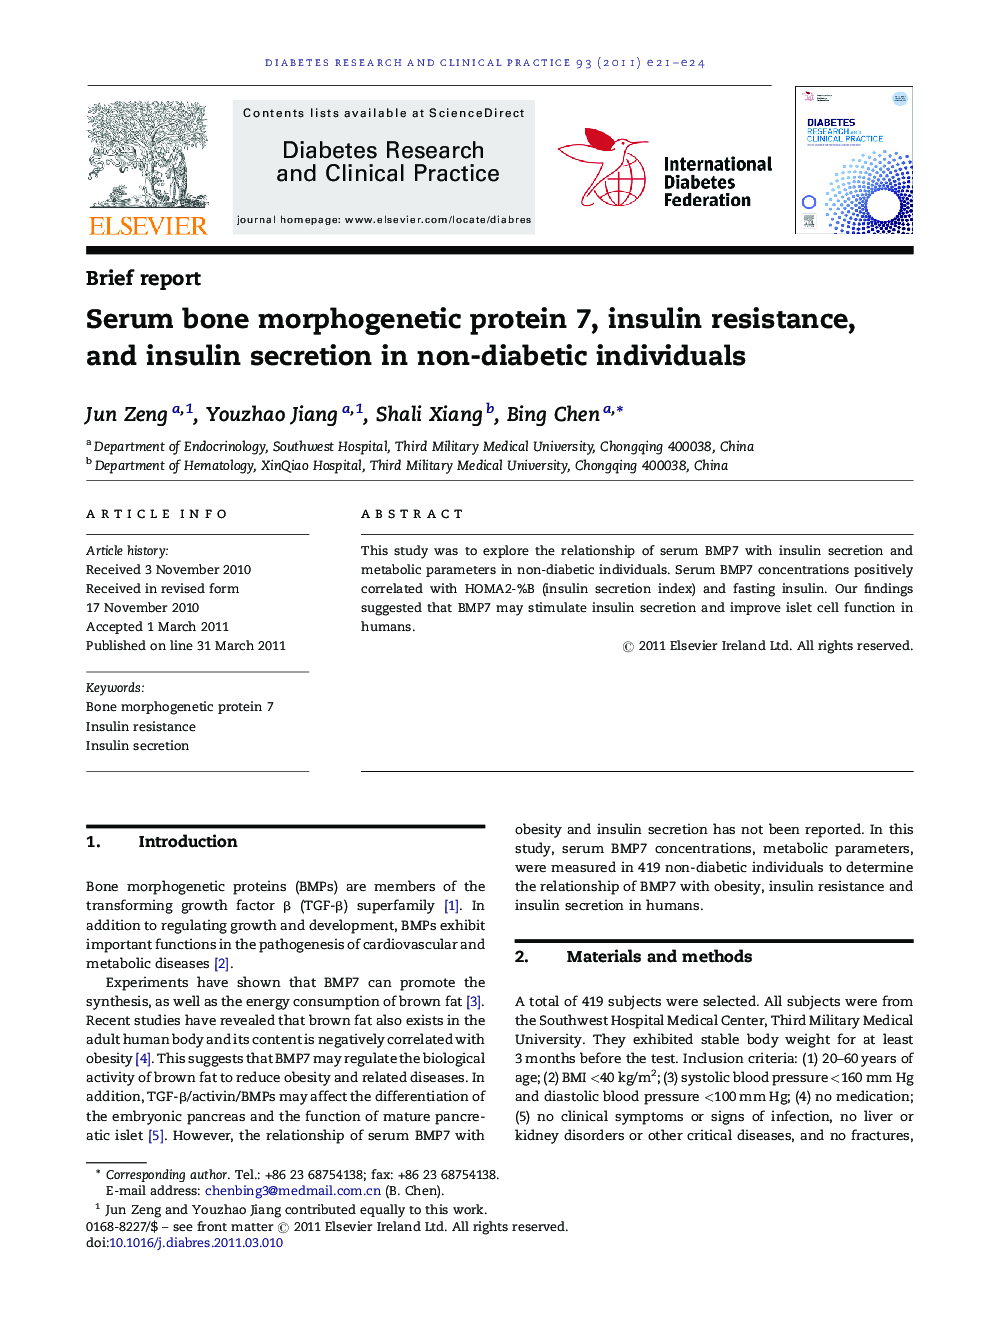 Serum bone morphogenetic protein 7, insulin resistance, and insulin secretion in non-diabetic individuals